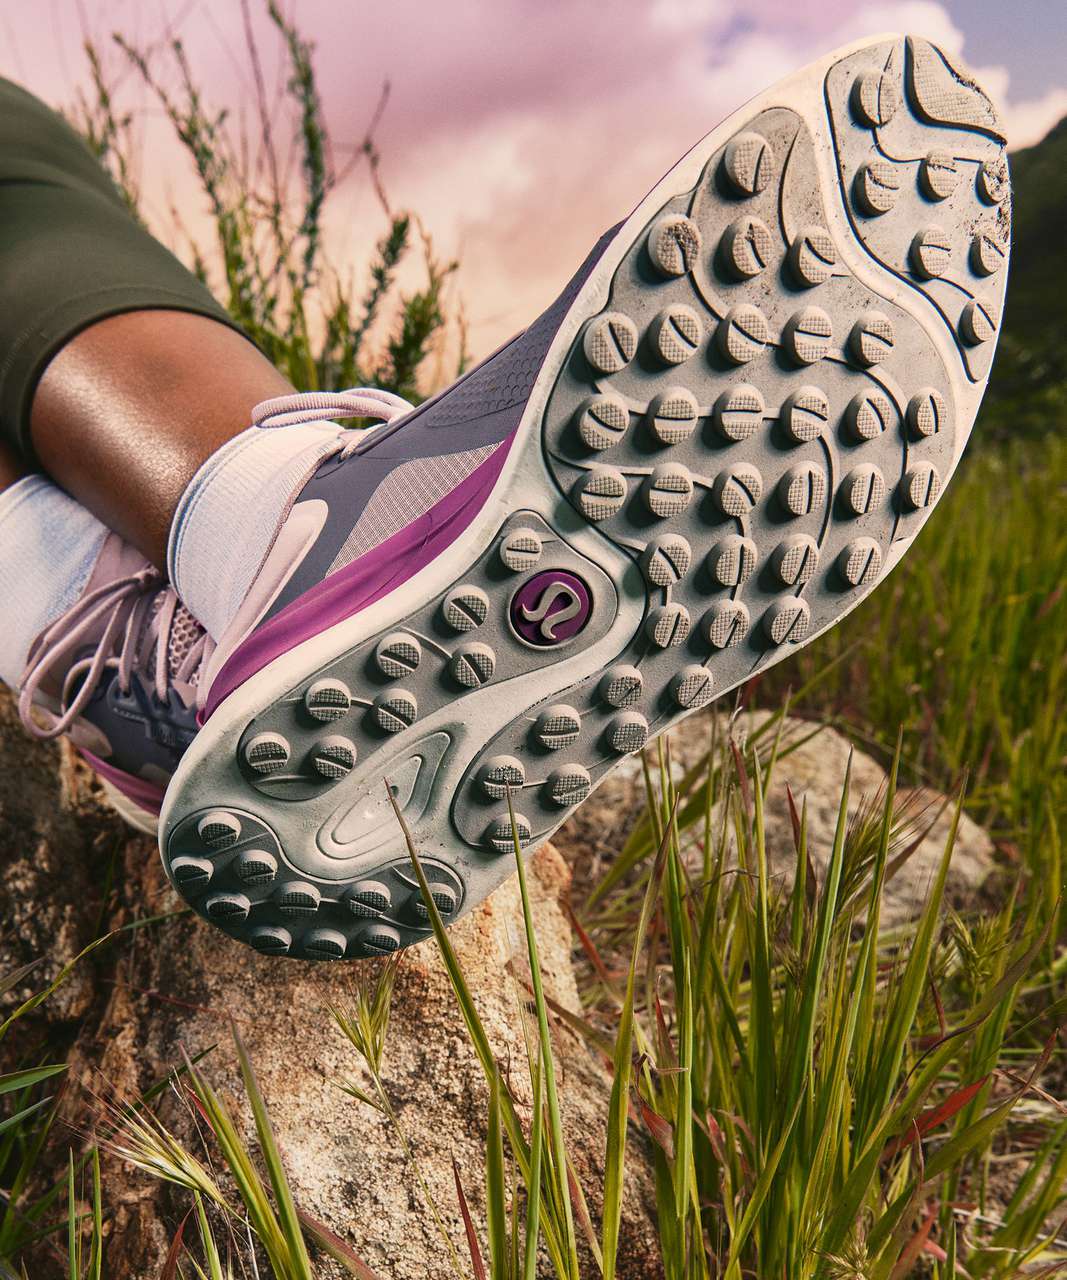 Lululemon Blissfeel Trail Womens Running Shoe - Violet Verbena / Purple Ash / Atomic Purple